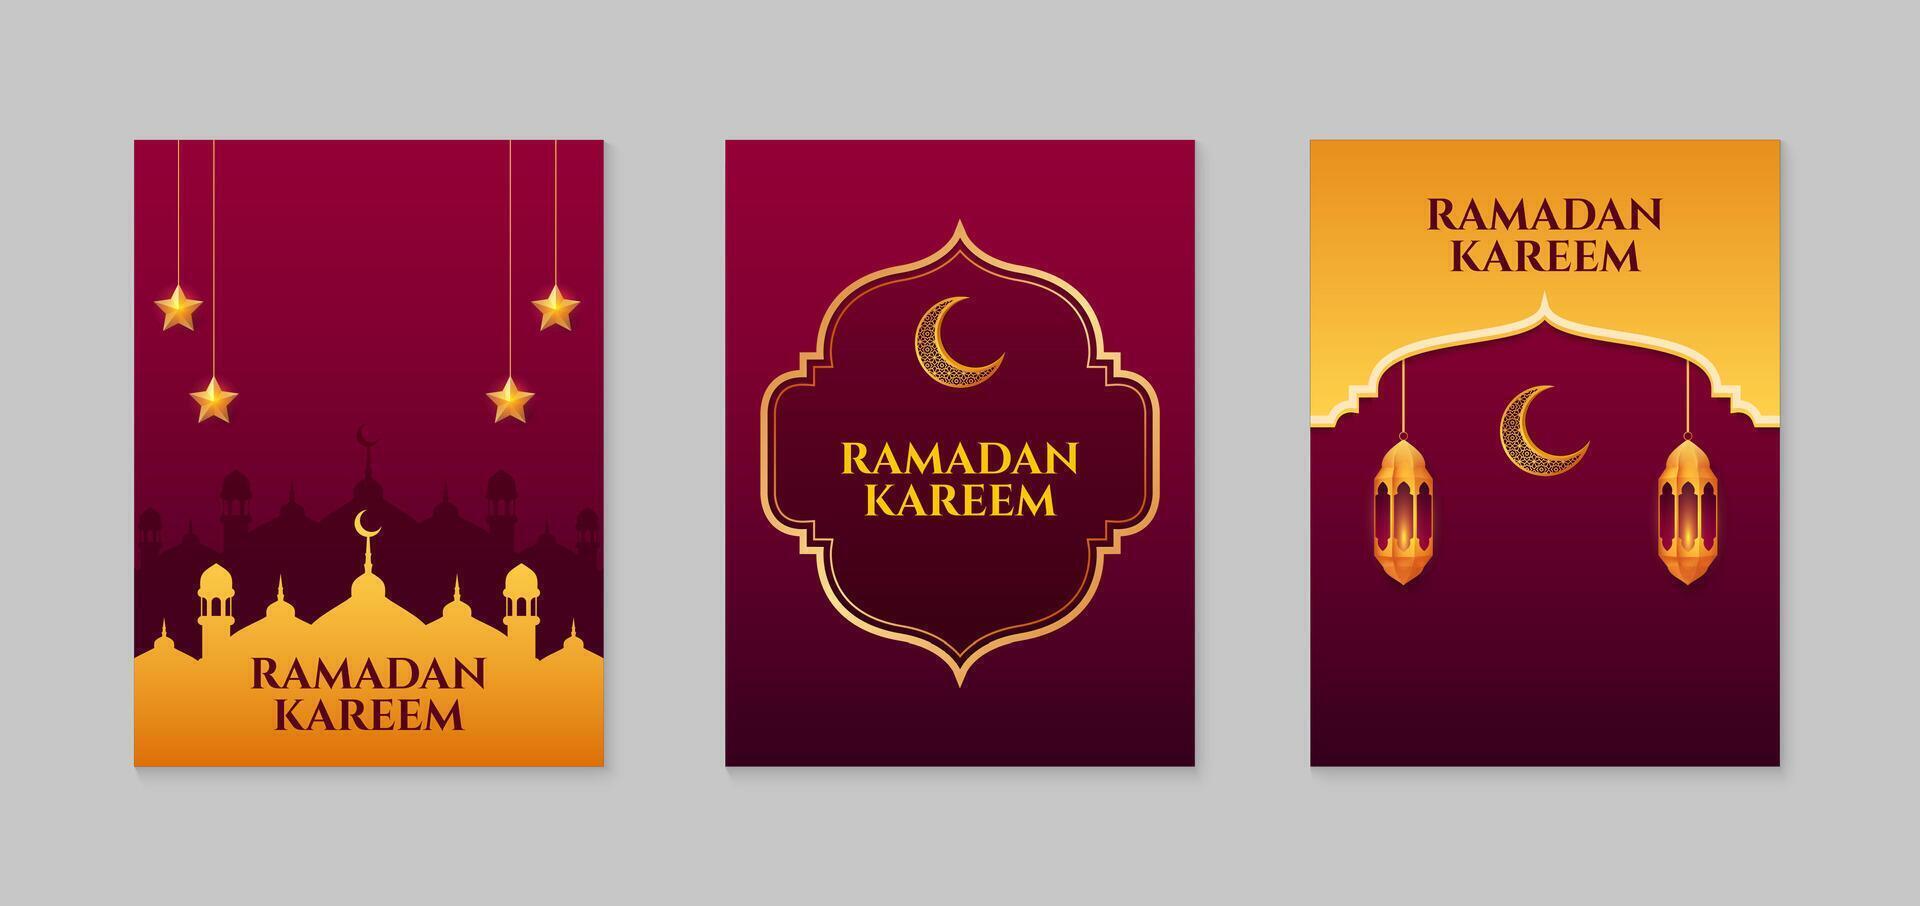 Ramadan Kareem. Set of Islamic Ramadan greeting card template with golden crescent moon, stars and mosque. Vector illustration.